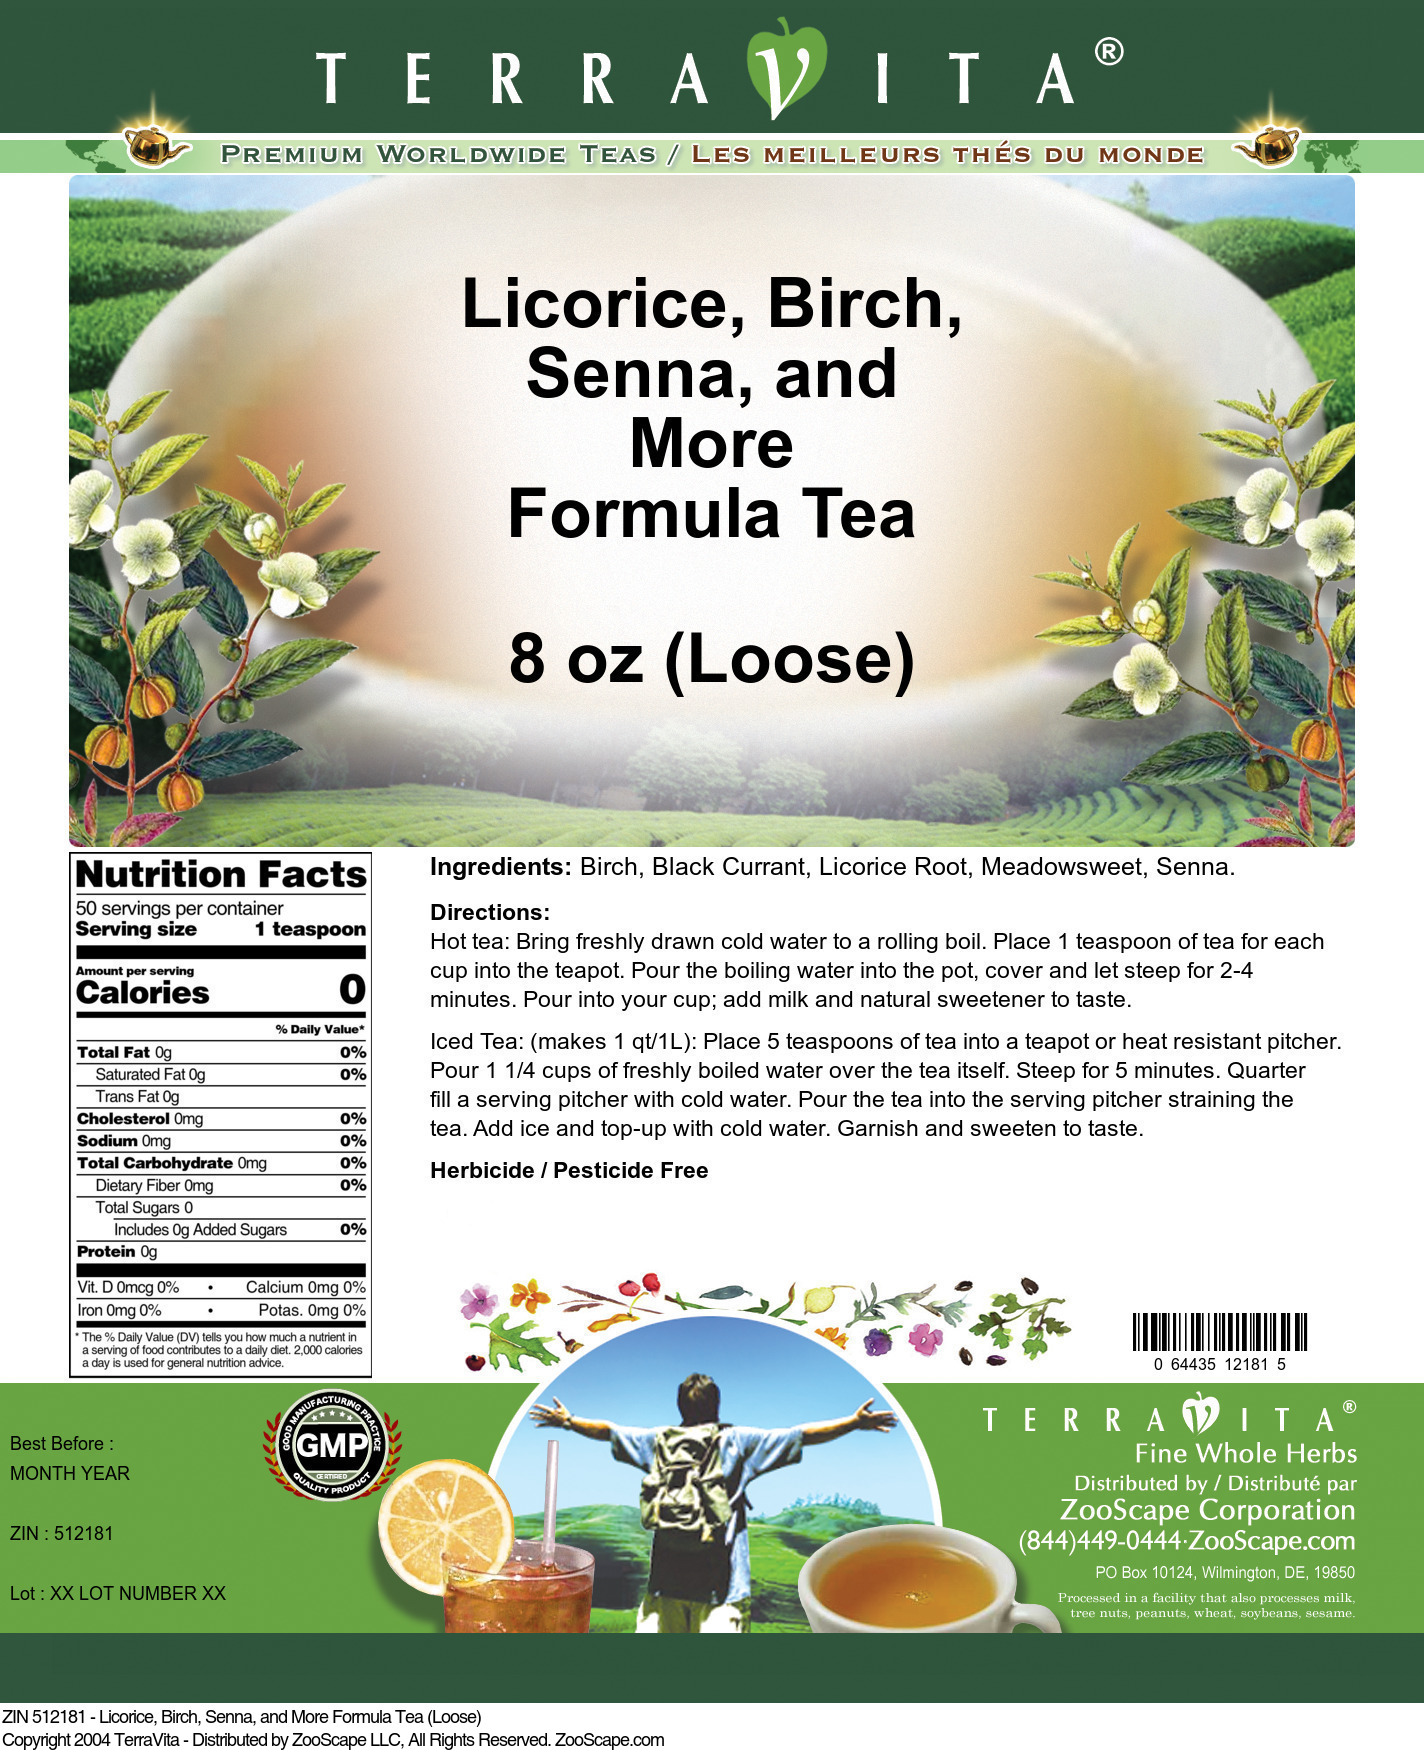 Licorice, Birch, Senna, and More Formula Tea (Loose) - Label